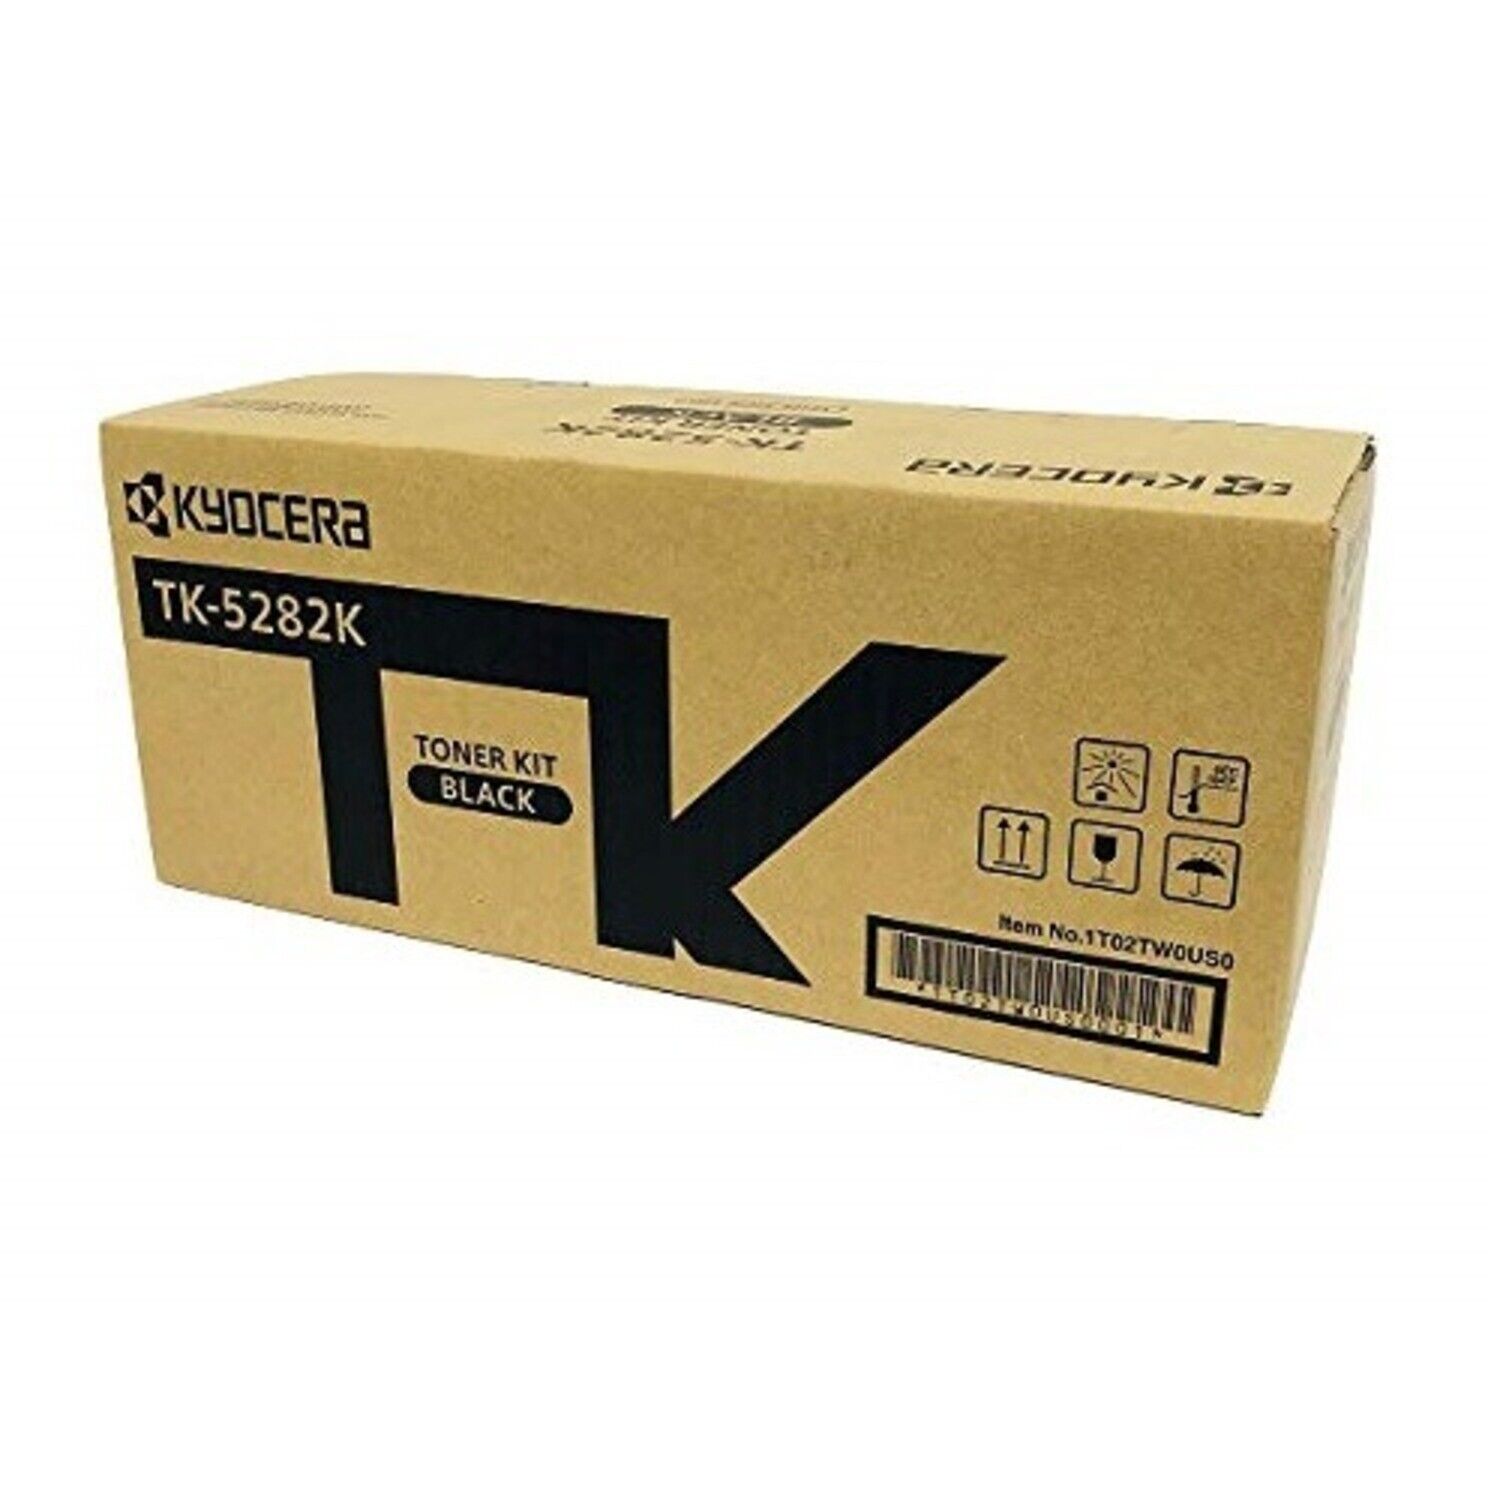 Genuine Kyocera 1T02TW0US0 Model TK-5282K Black Toner Kit For use with Kyocera E